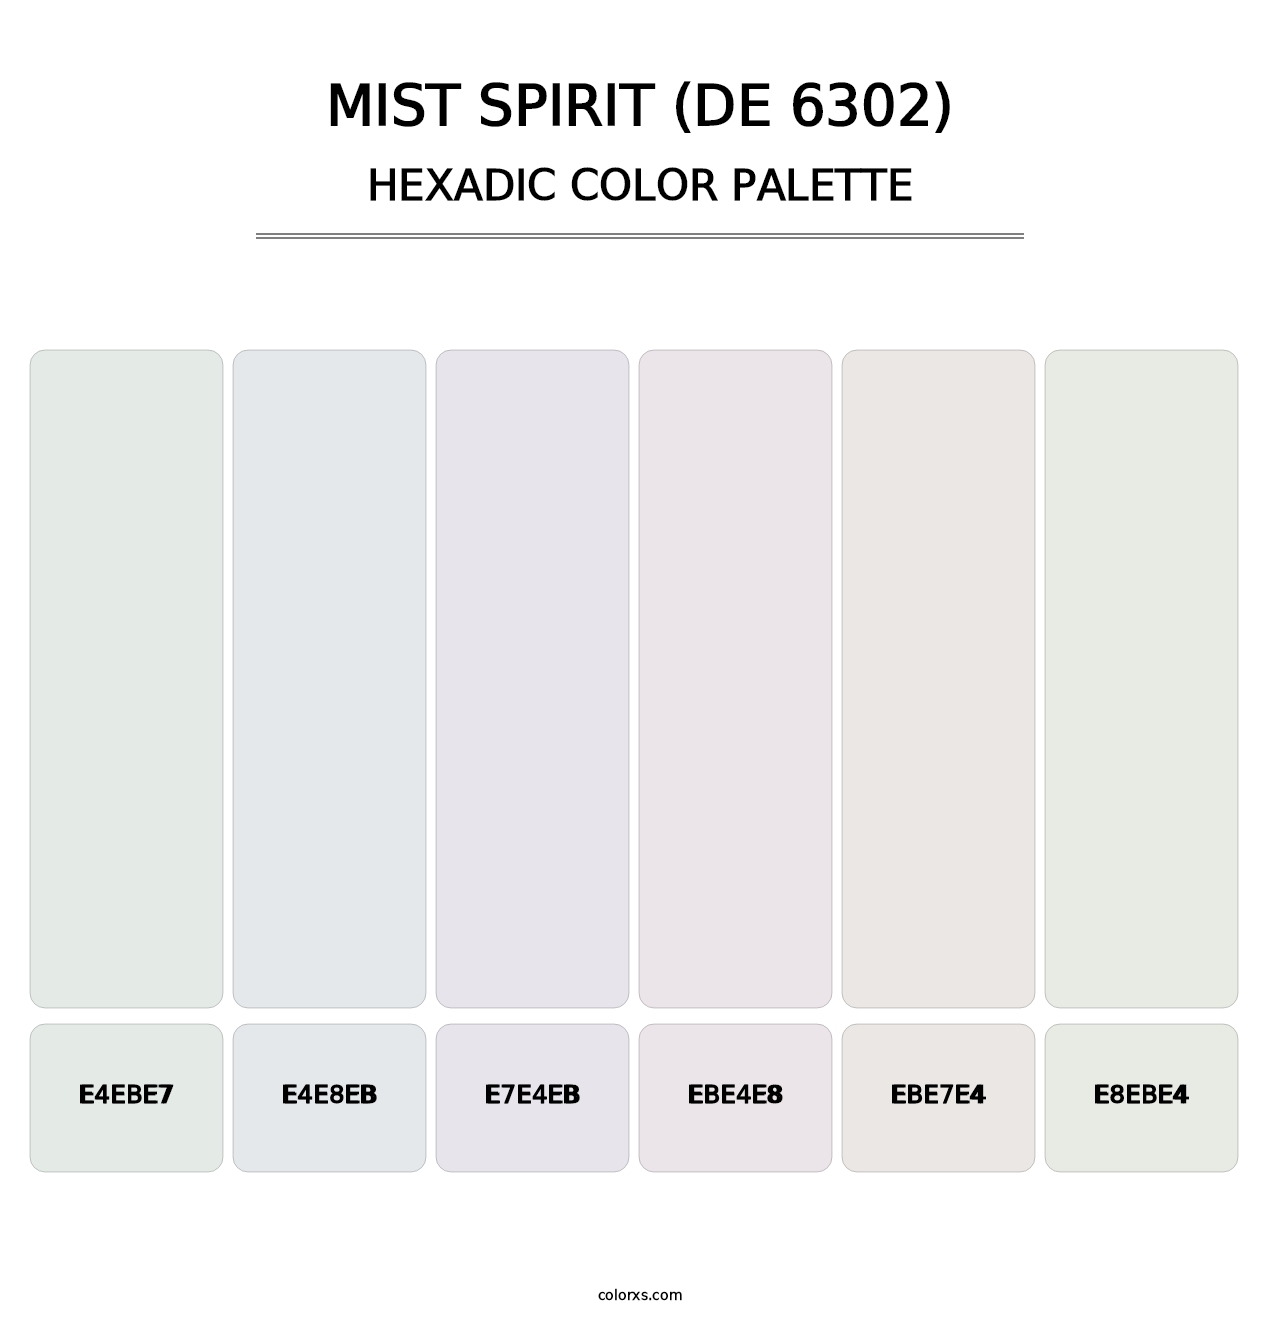 Mist Spirit (DE 6302) - Hexadic Color Palette